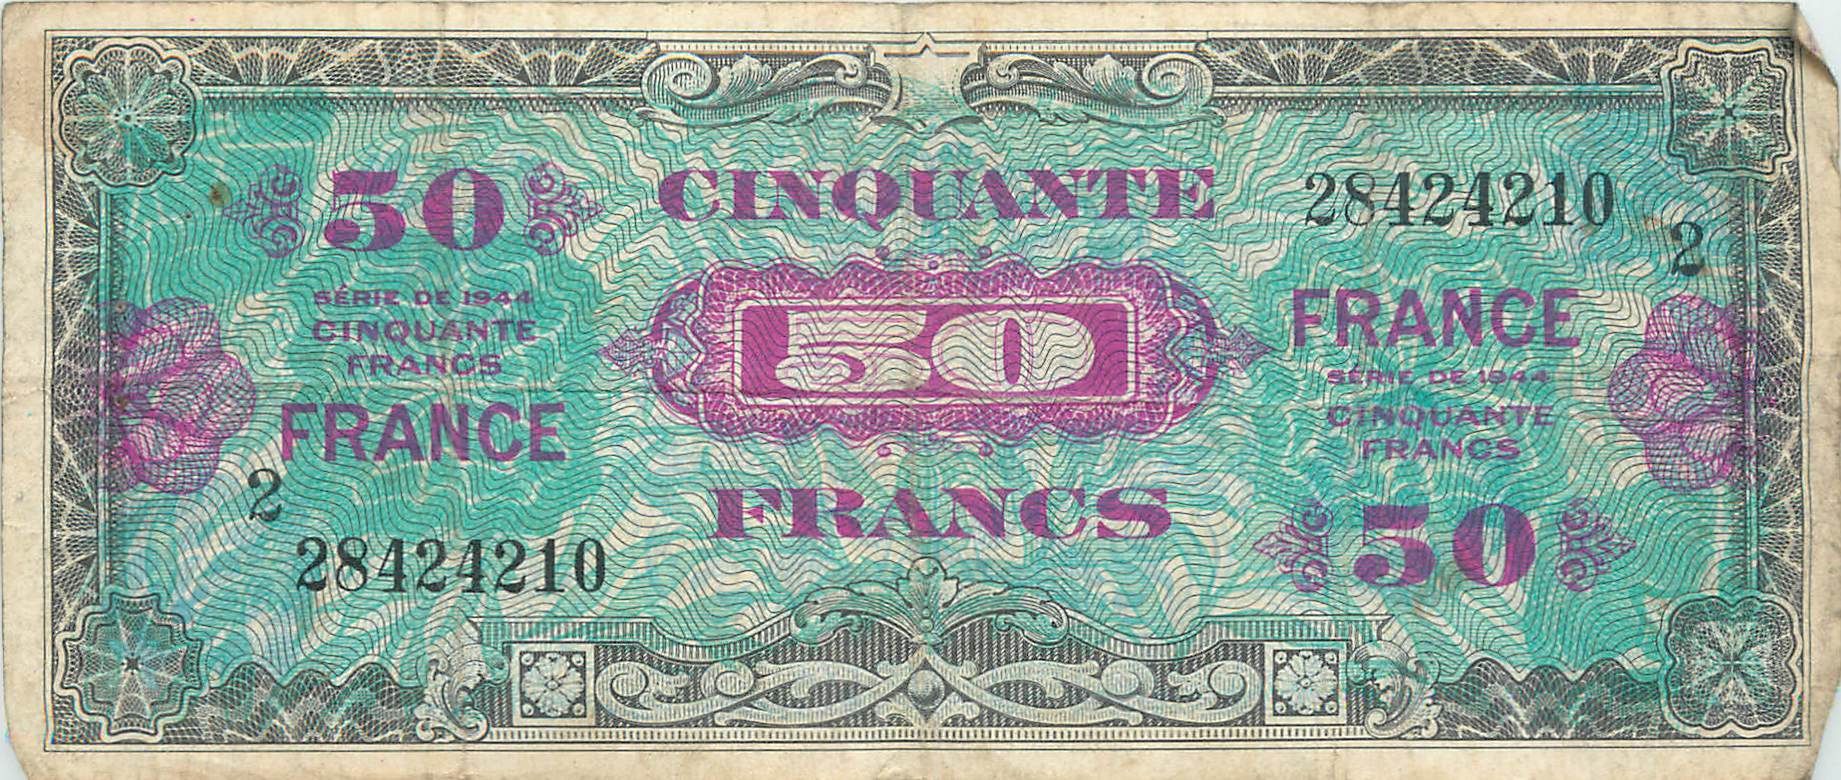 Null 一套14张纸币 - 法国和外国人。

2-法国：1944年的50法郎系列和1989年的200法郎。

1-日本：100日元 1953年。

3-西班牙&hellip;